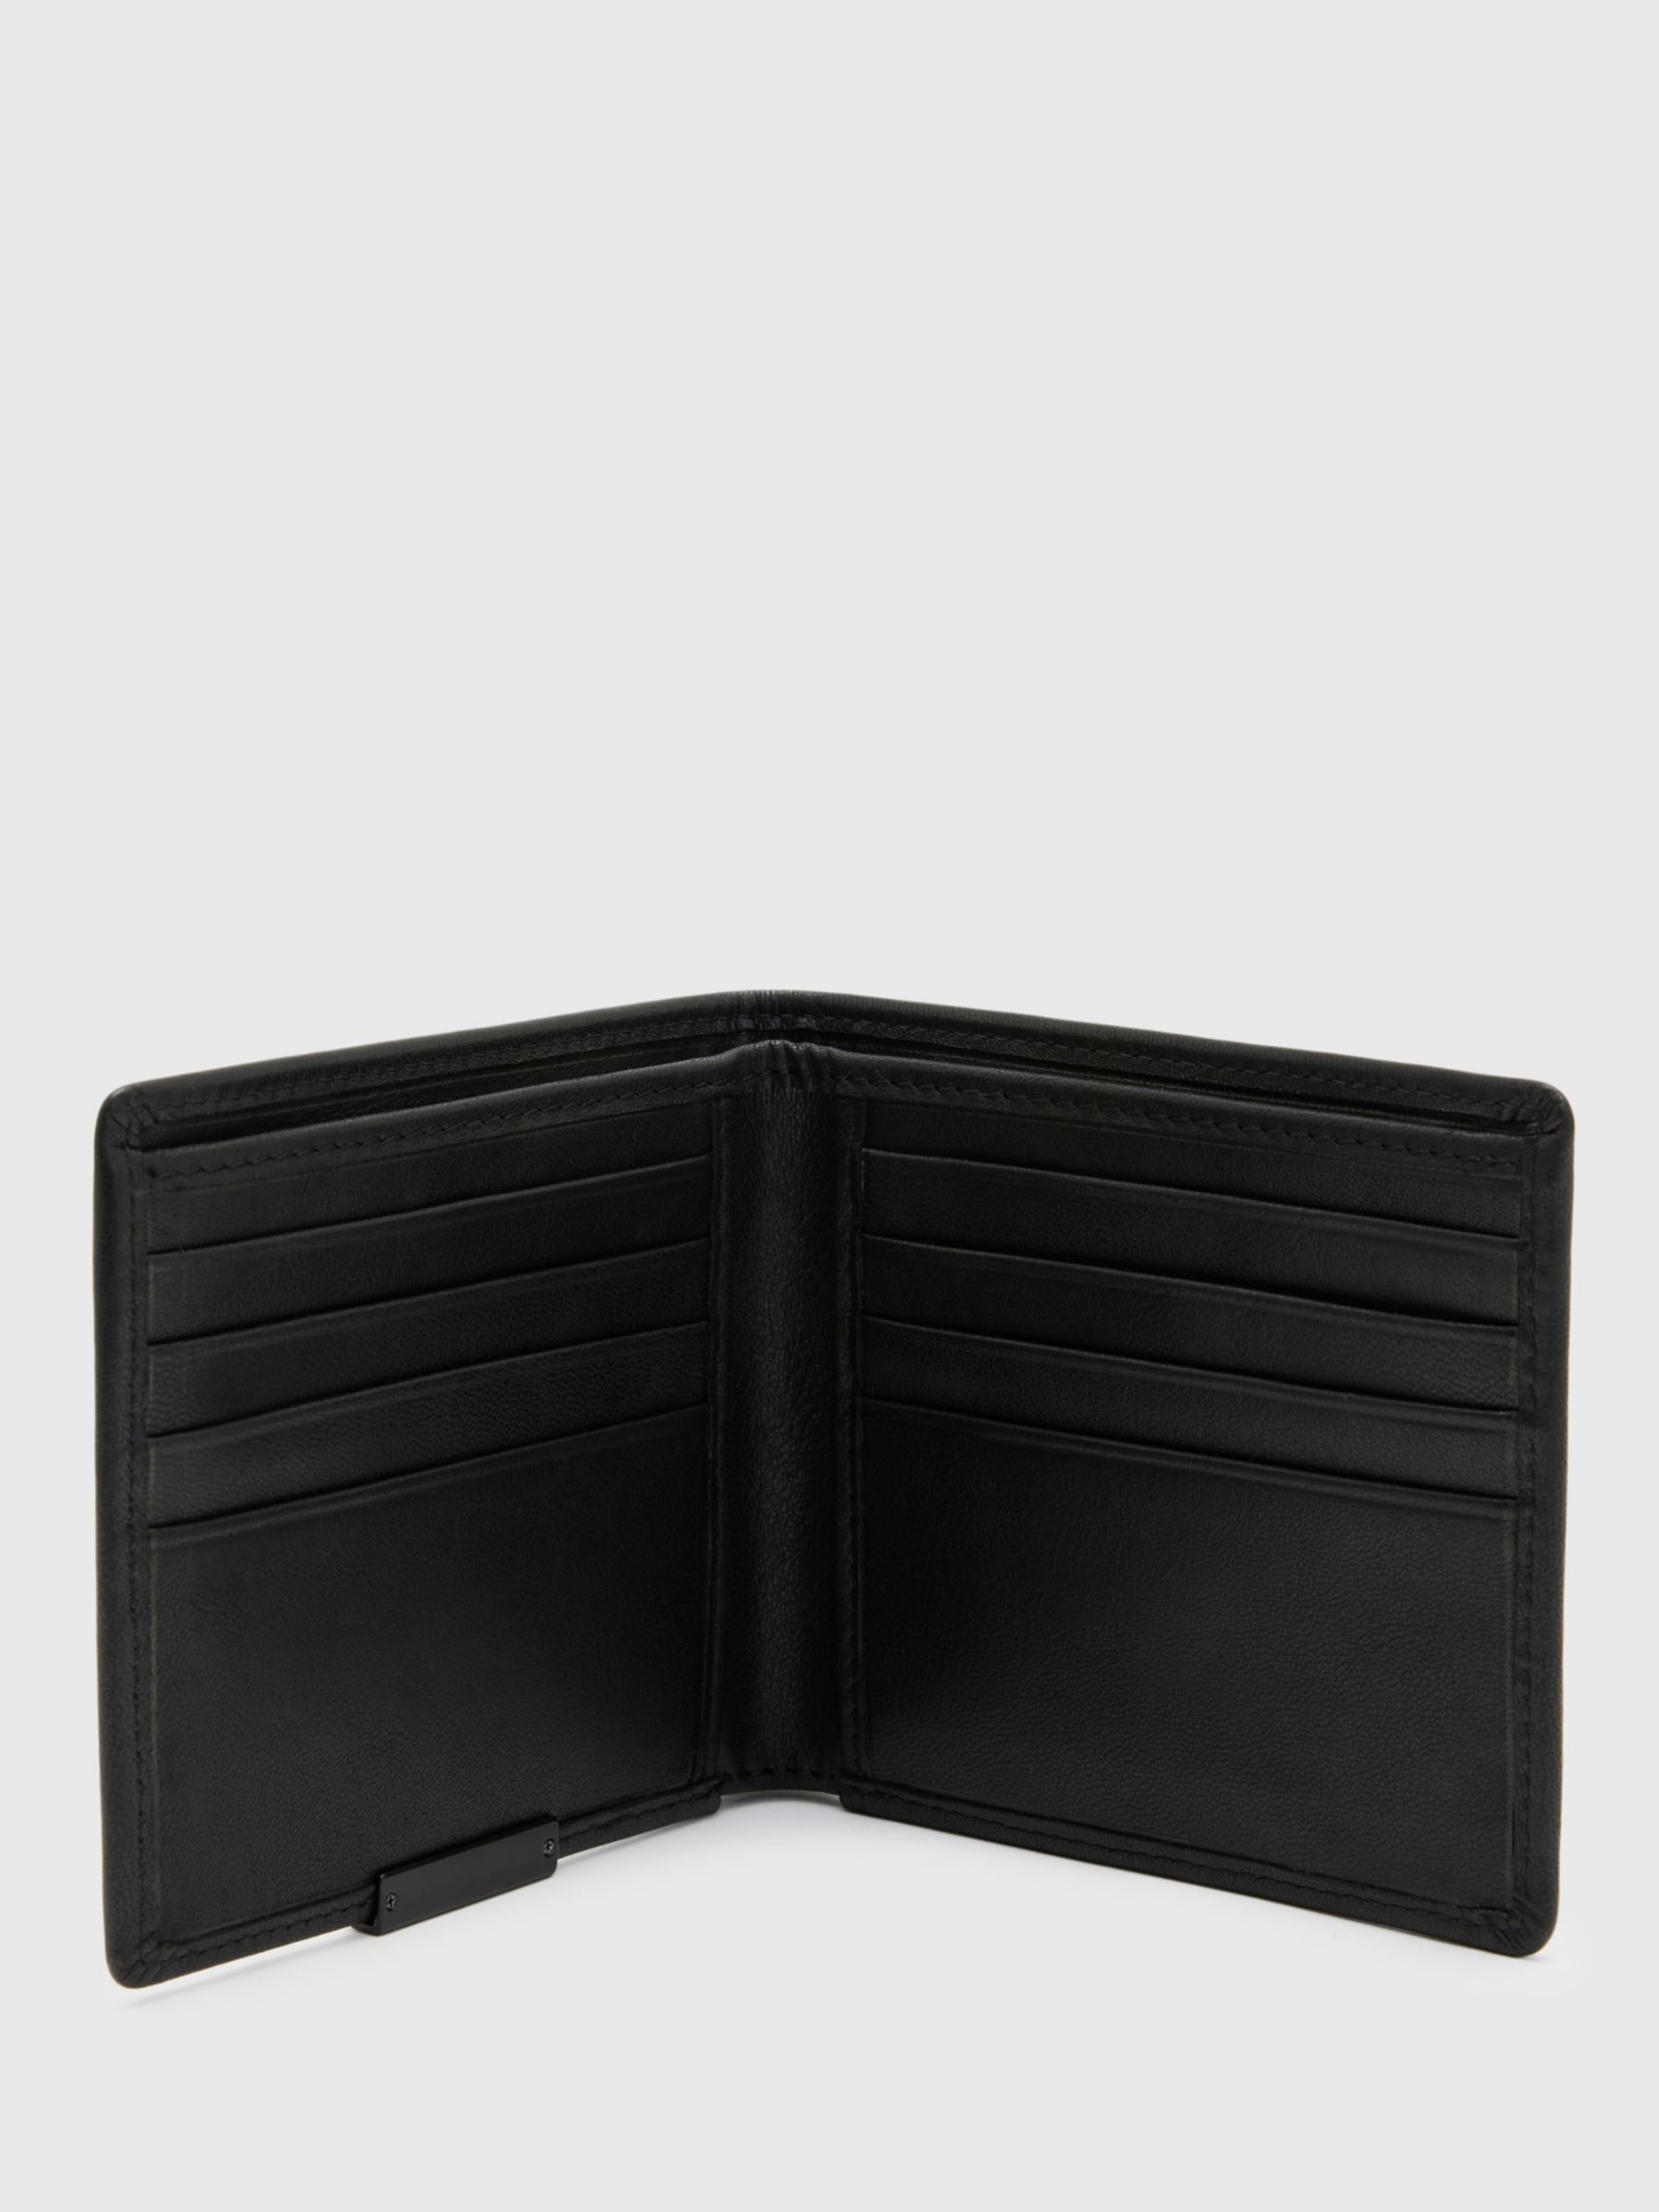 AllSaints Attain Cardholder Wallet, Black, One Size